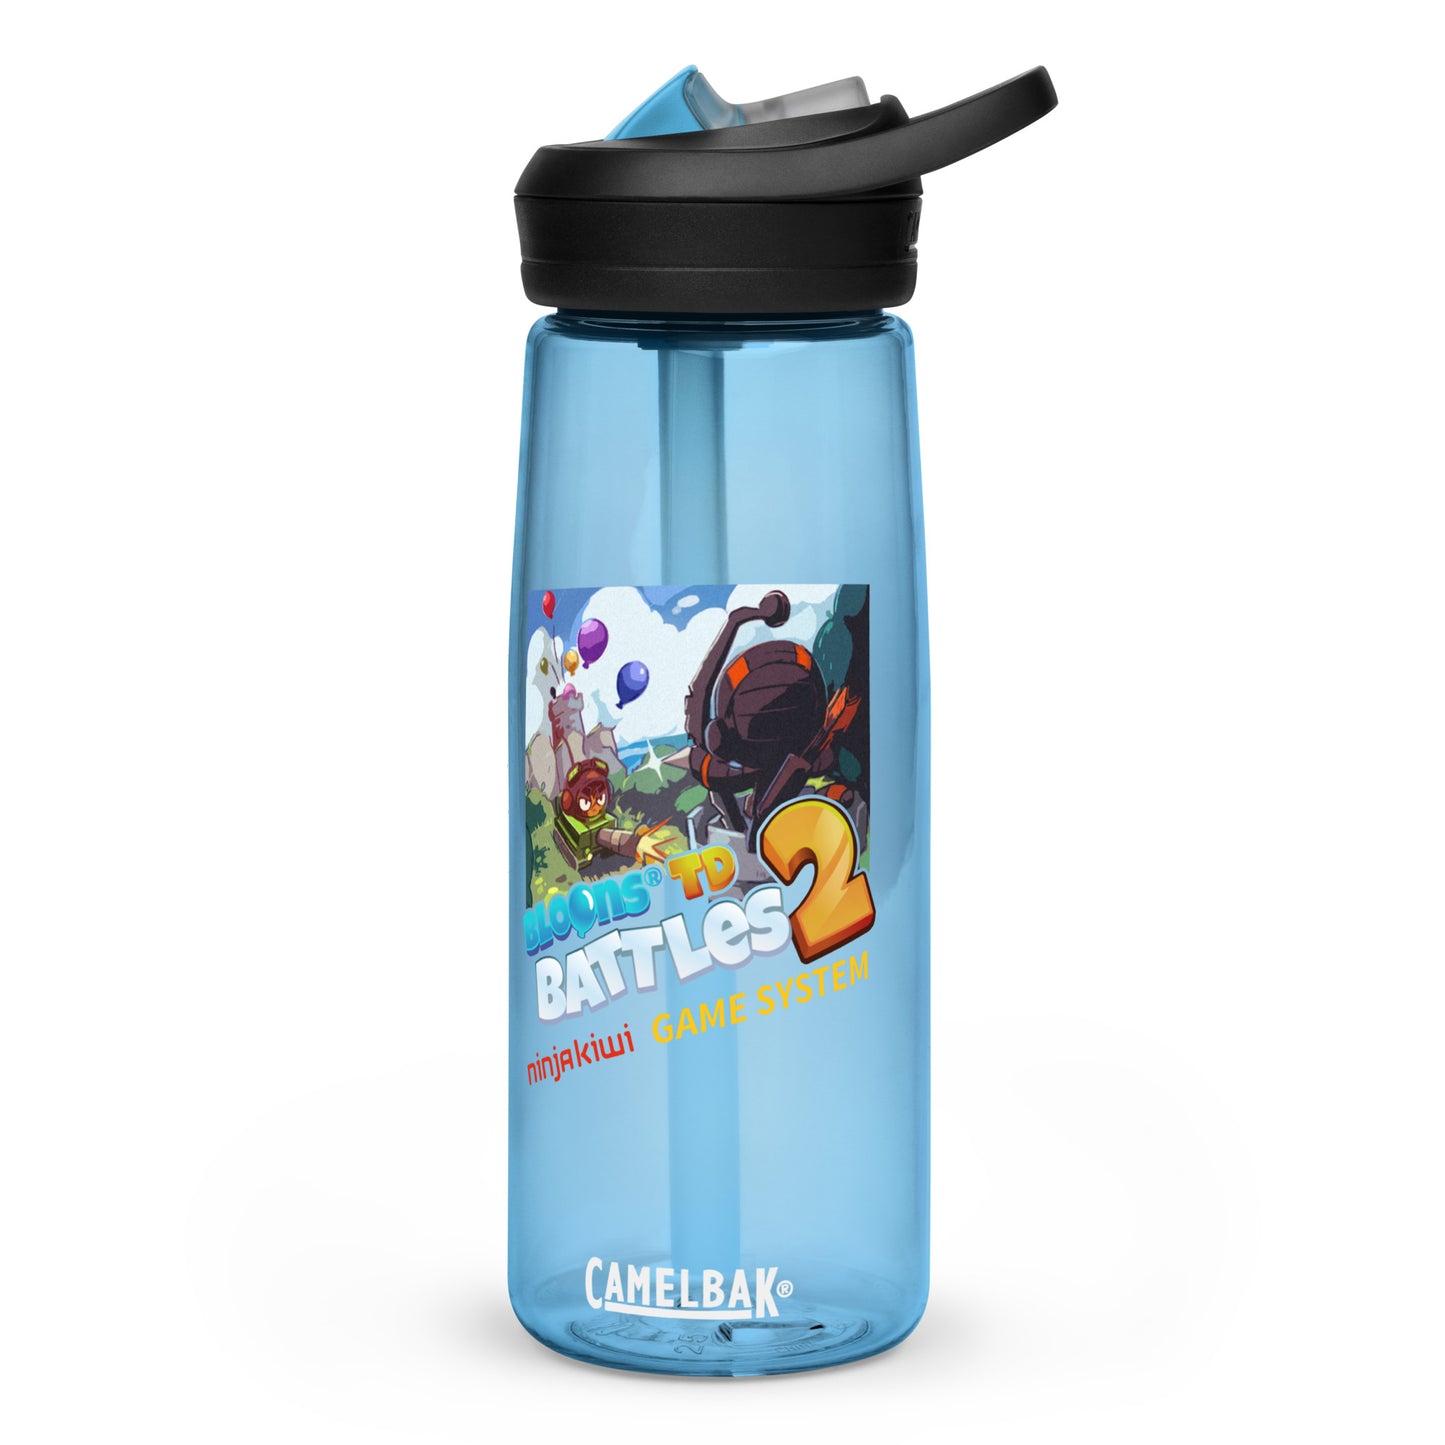 Battles 2 - Ninja Kiwi Game System Sports Water Bottle | CamelBak Eddy®+